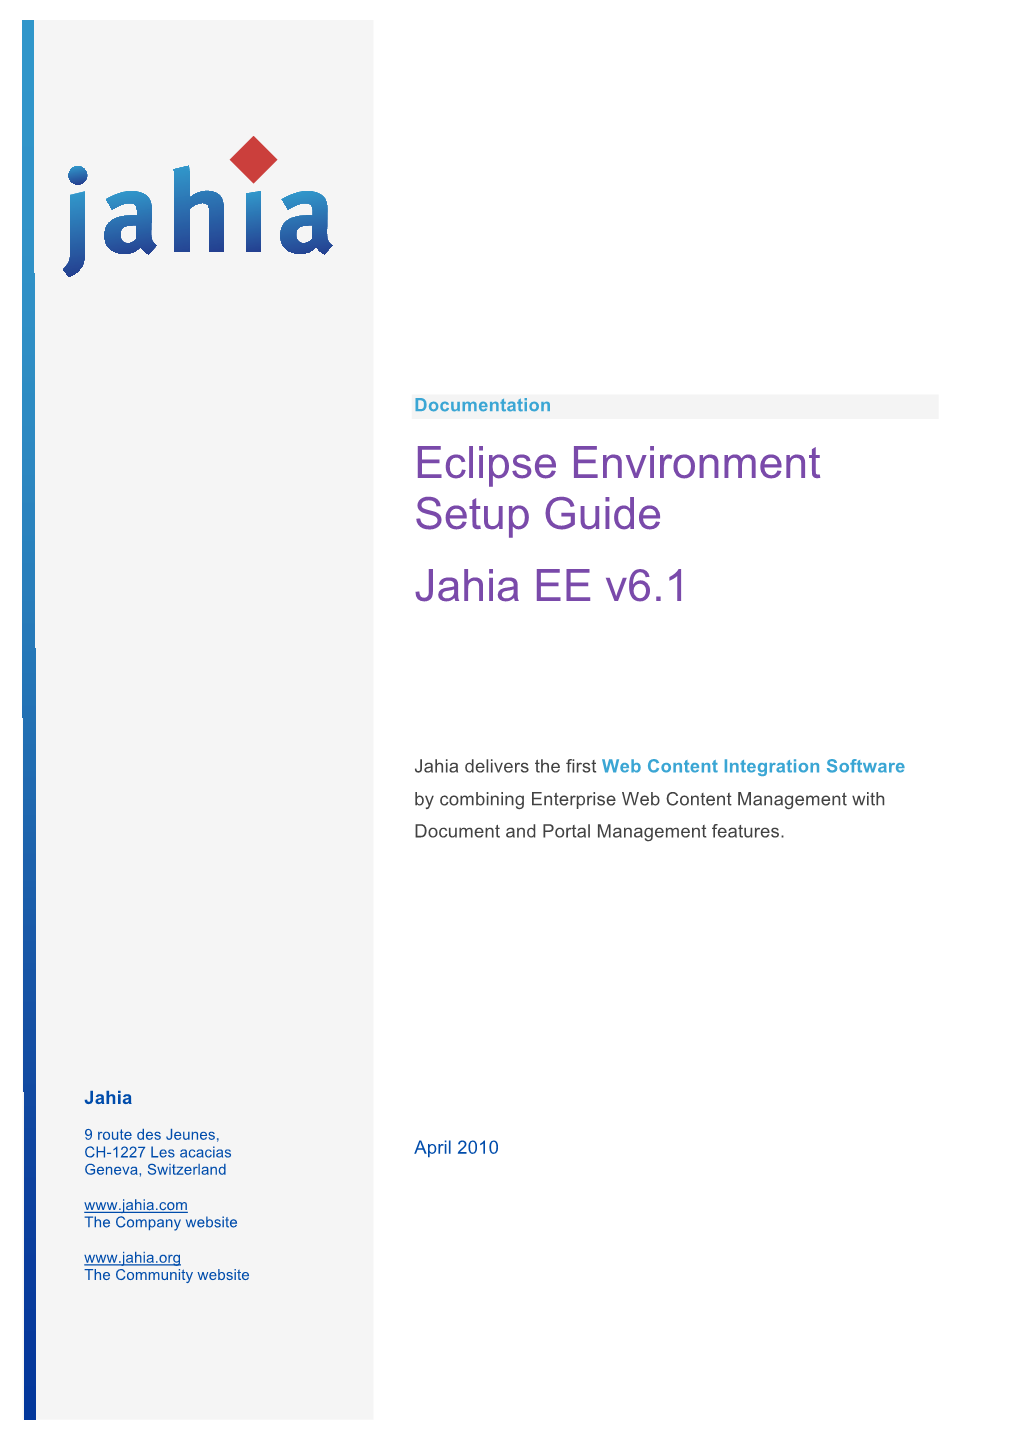 Eclipse Environment Setup Guide Jahia EE V6.1